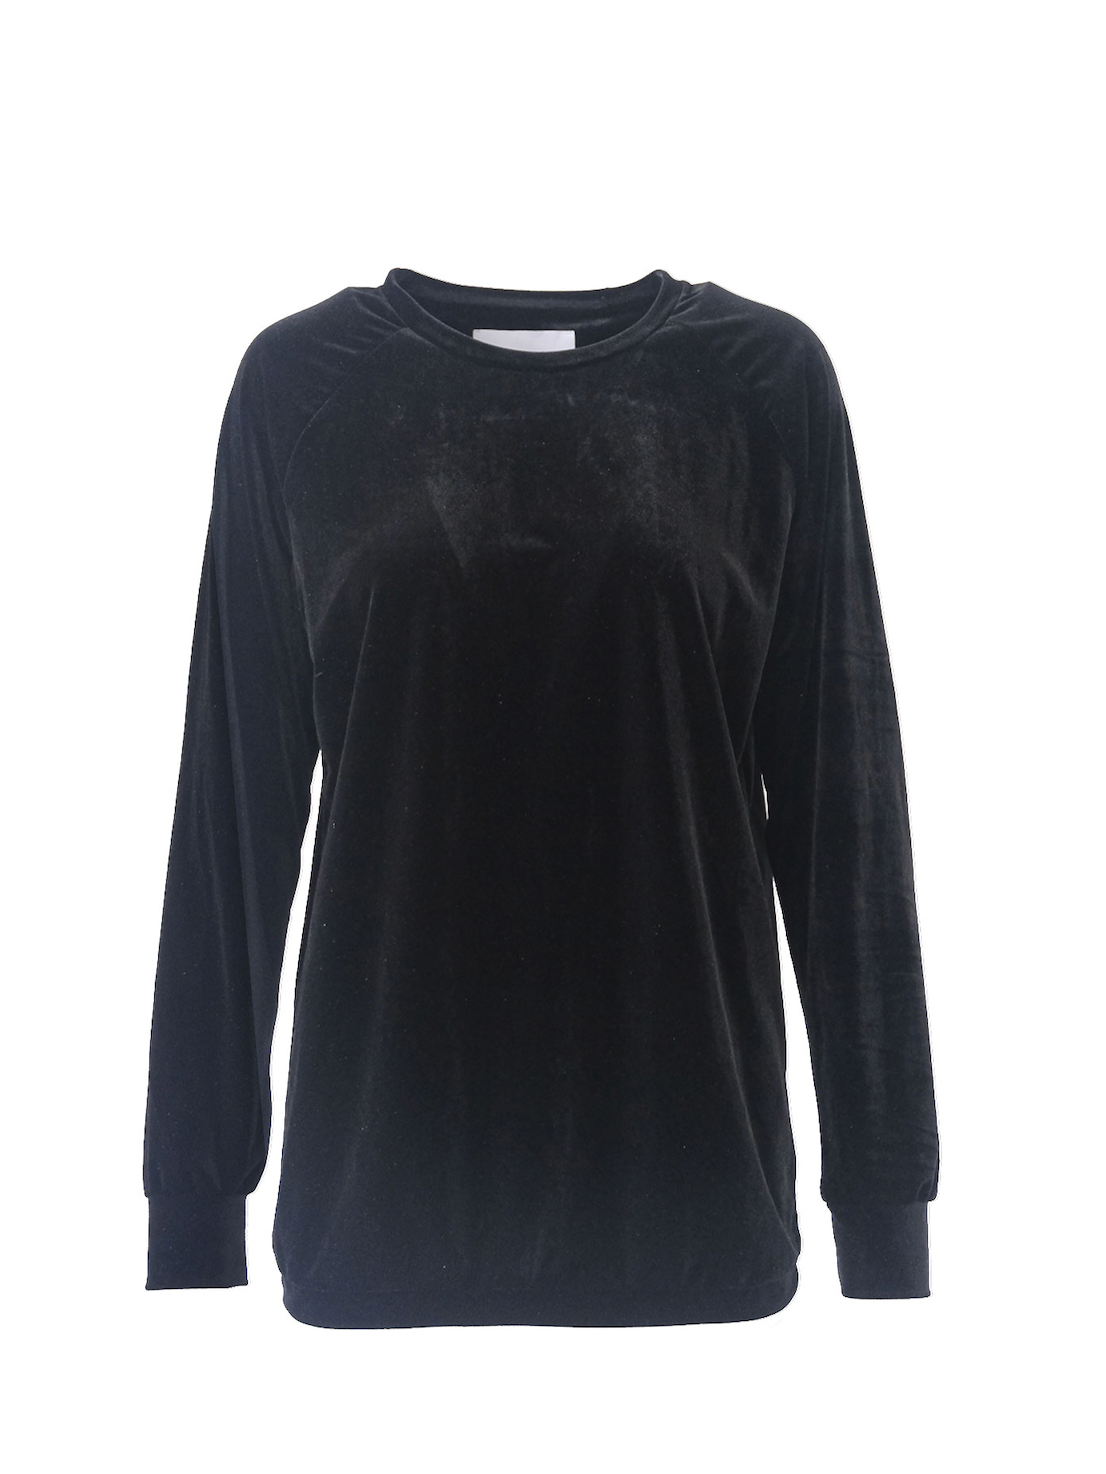 FLORA - chenille sweatshirt in black